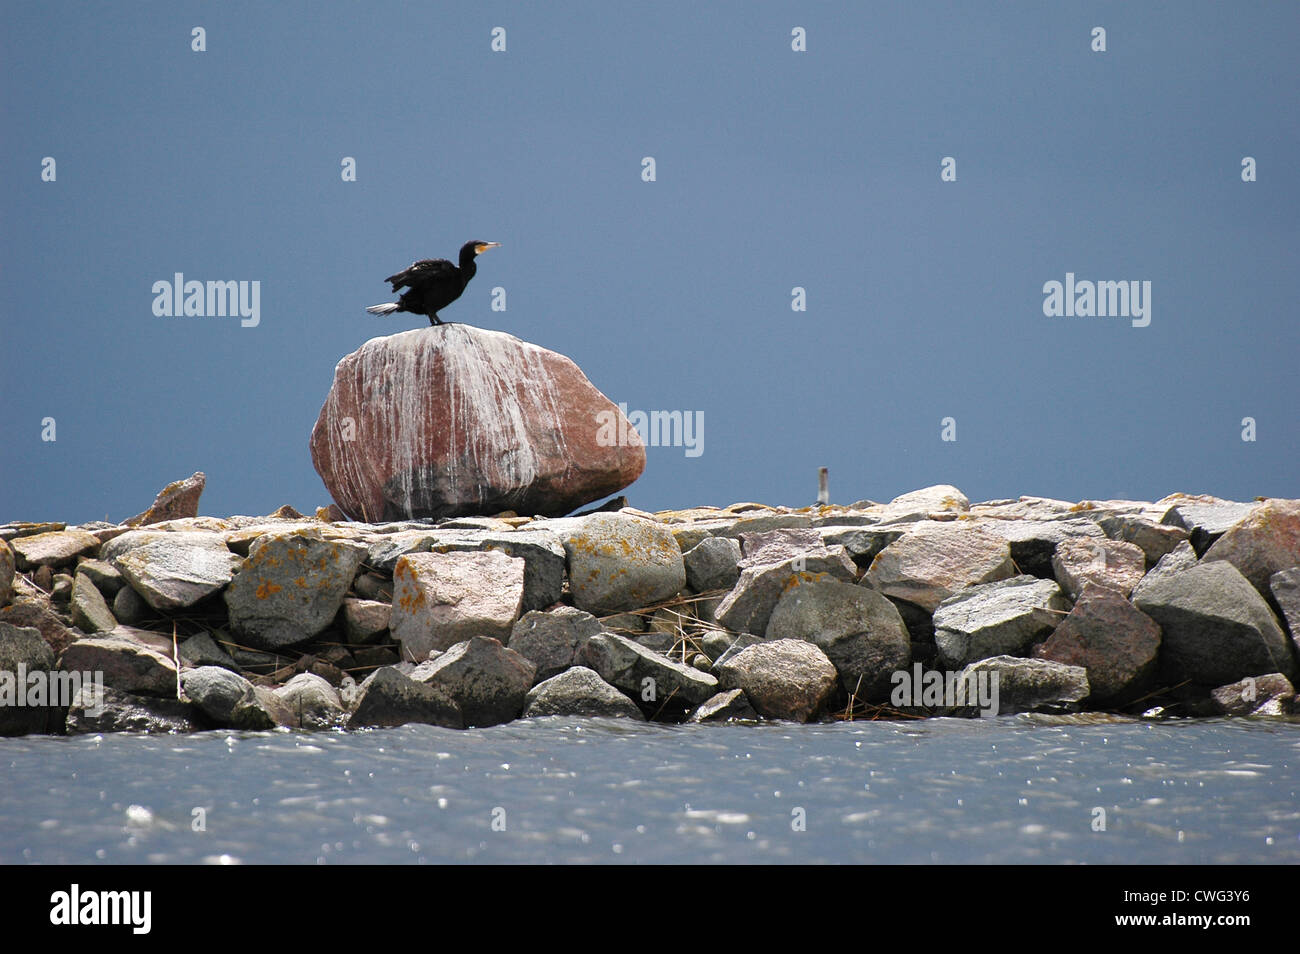 cormorant (Phalacrocorax carbo) on big stone at seaside Stock Photo